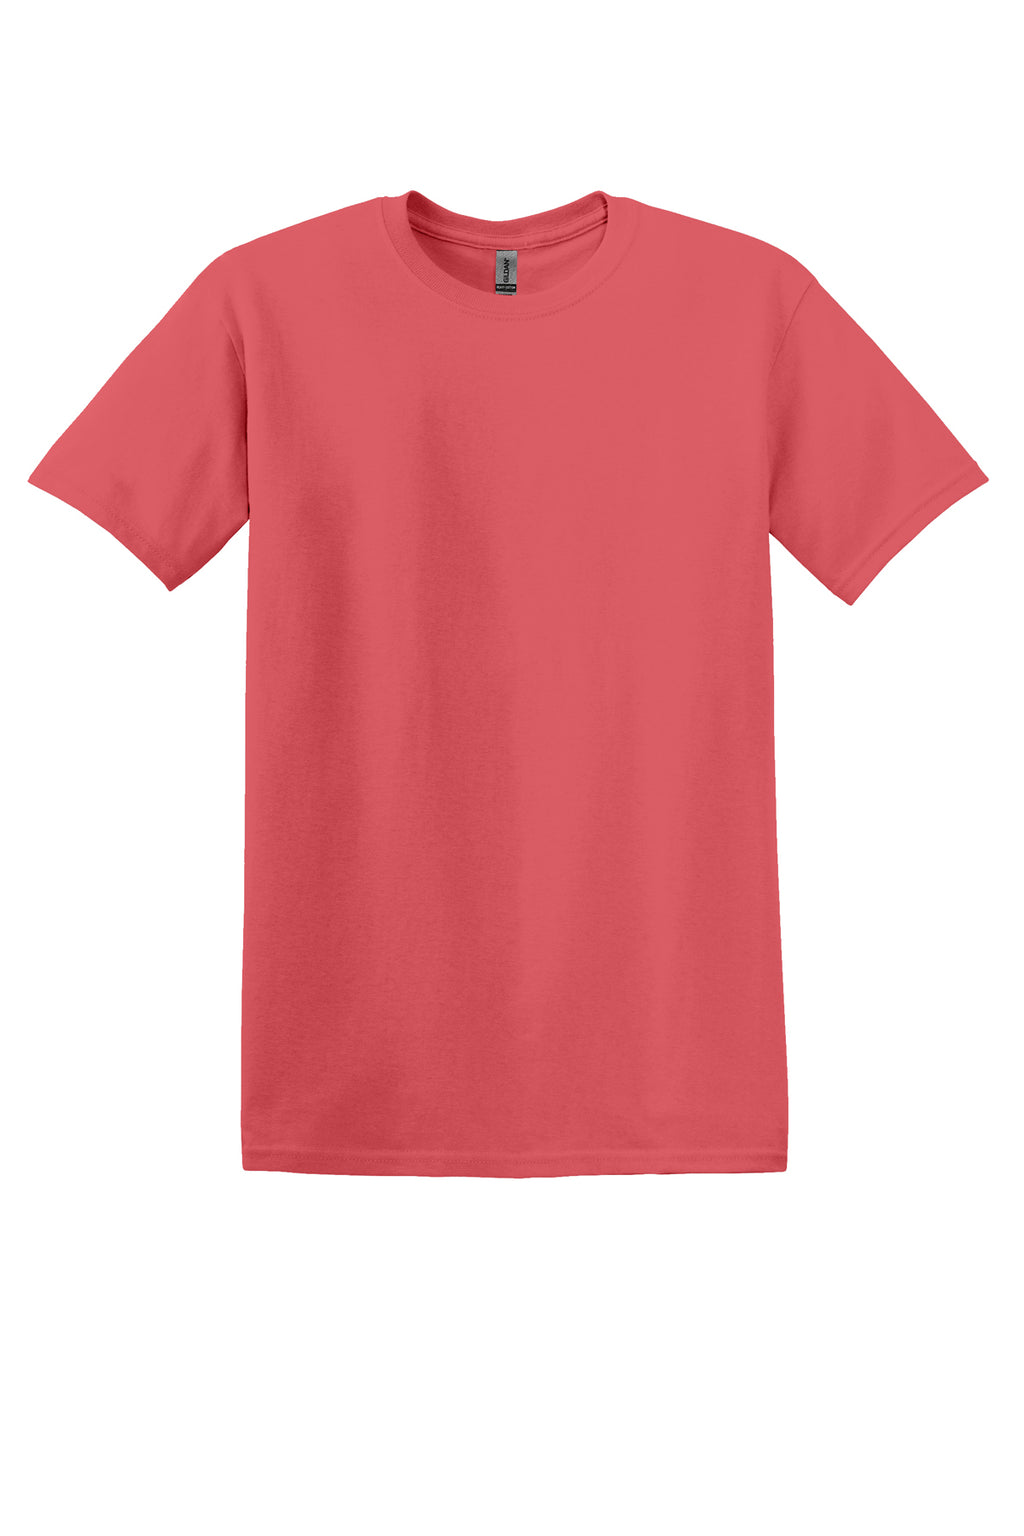 Gildan Mens/Unisex S/S Shirts Coral Silk